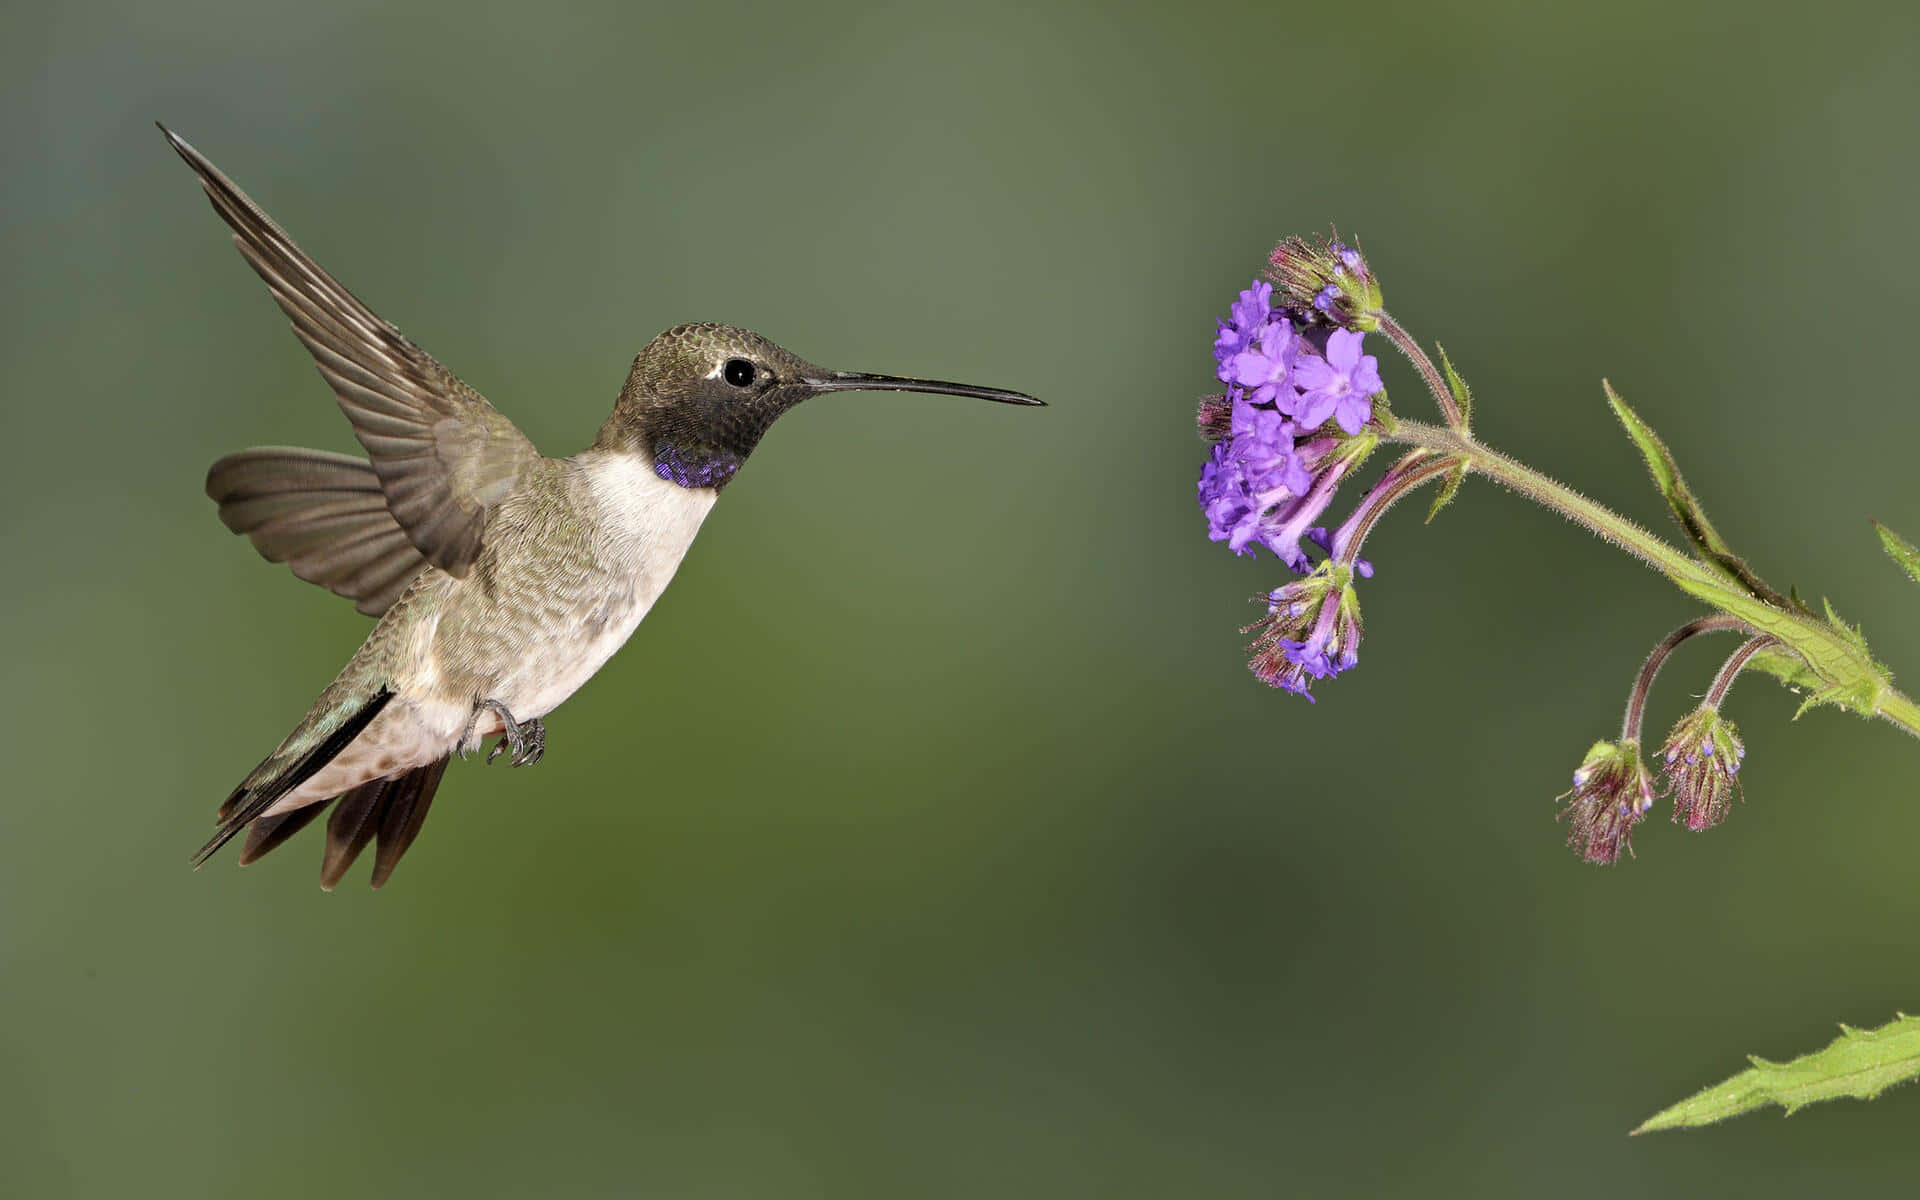 Image  "Female Hummingbird in Flight"